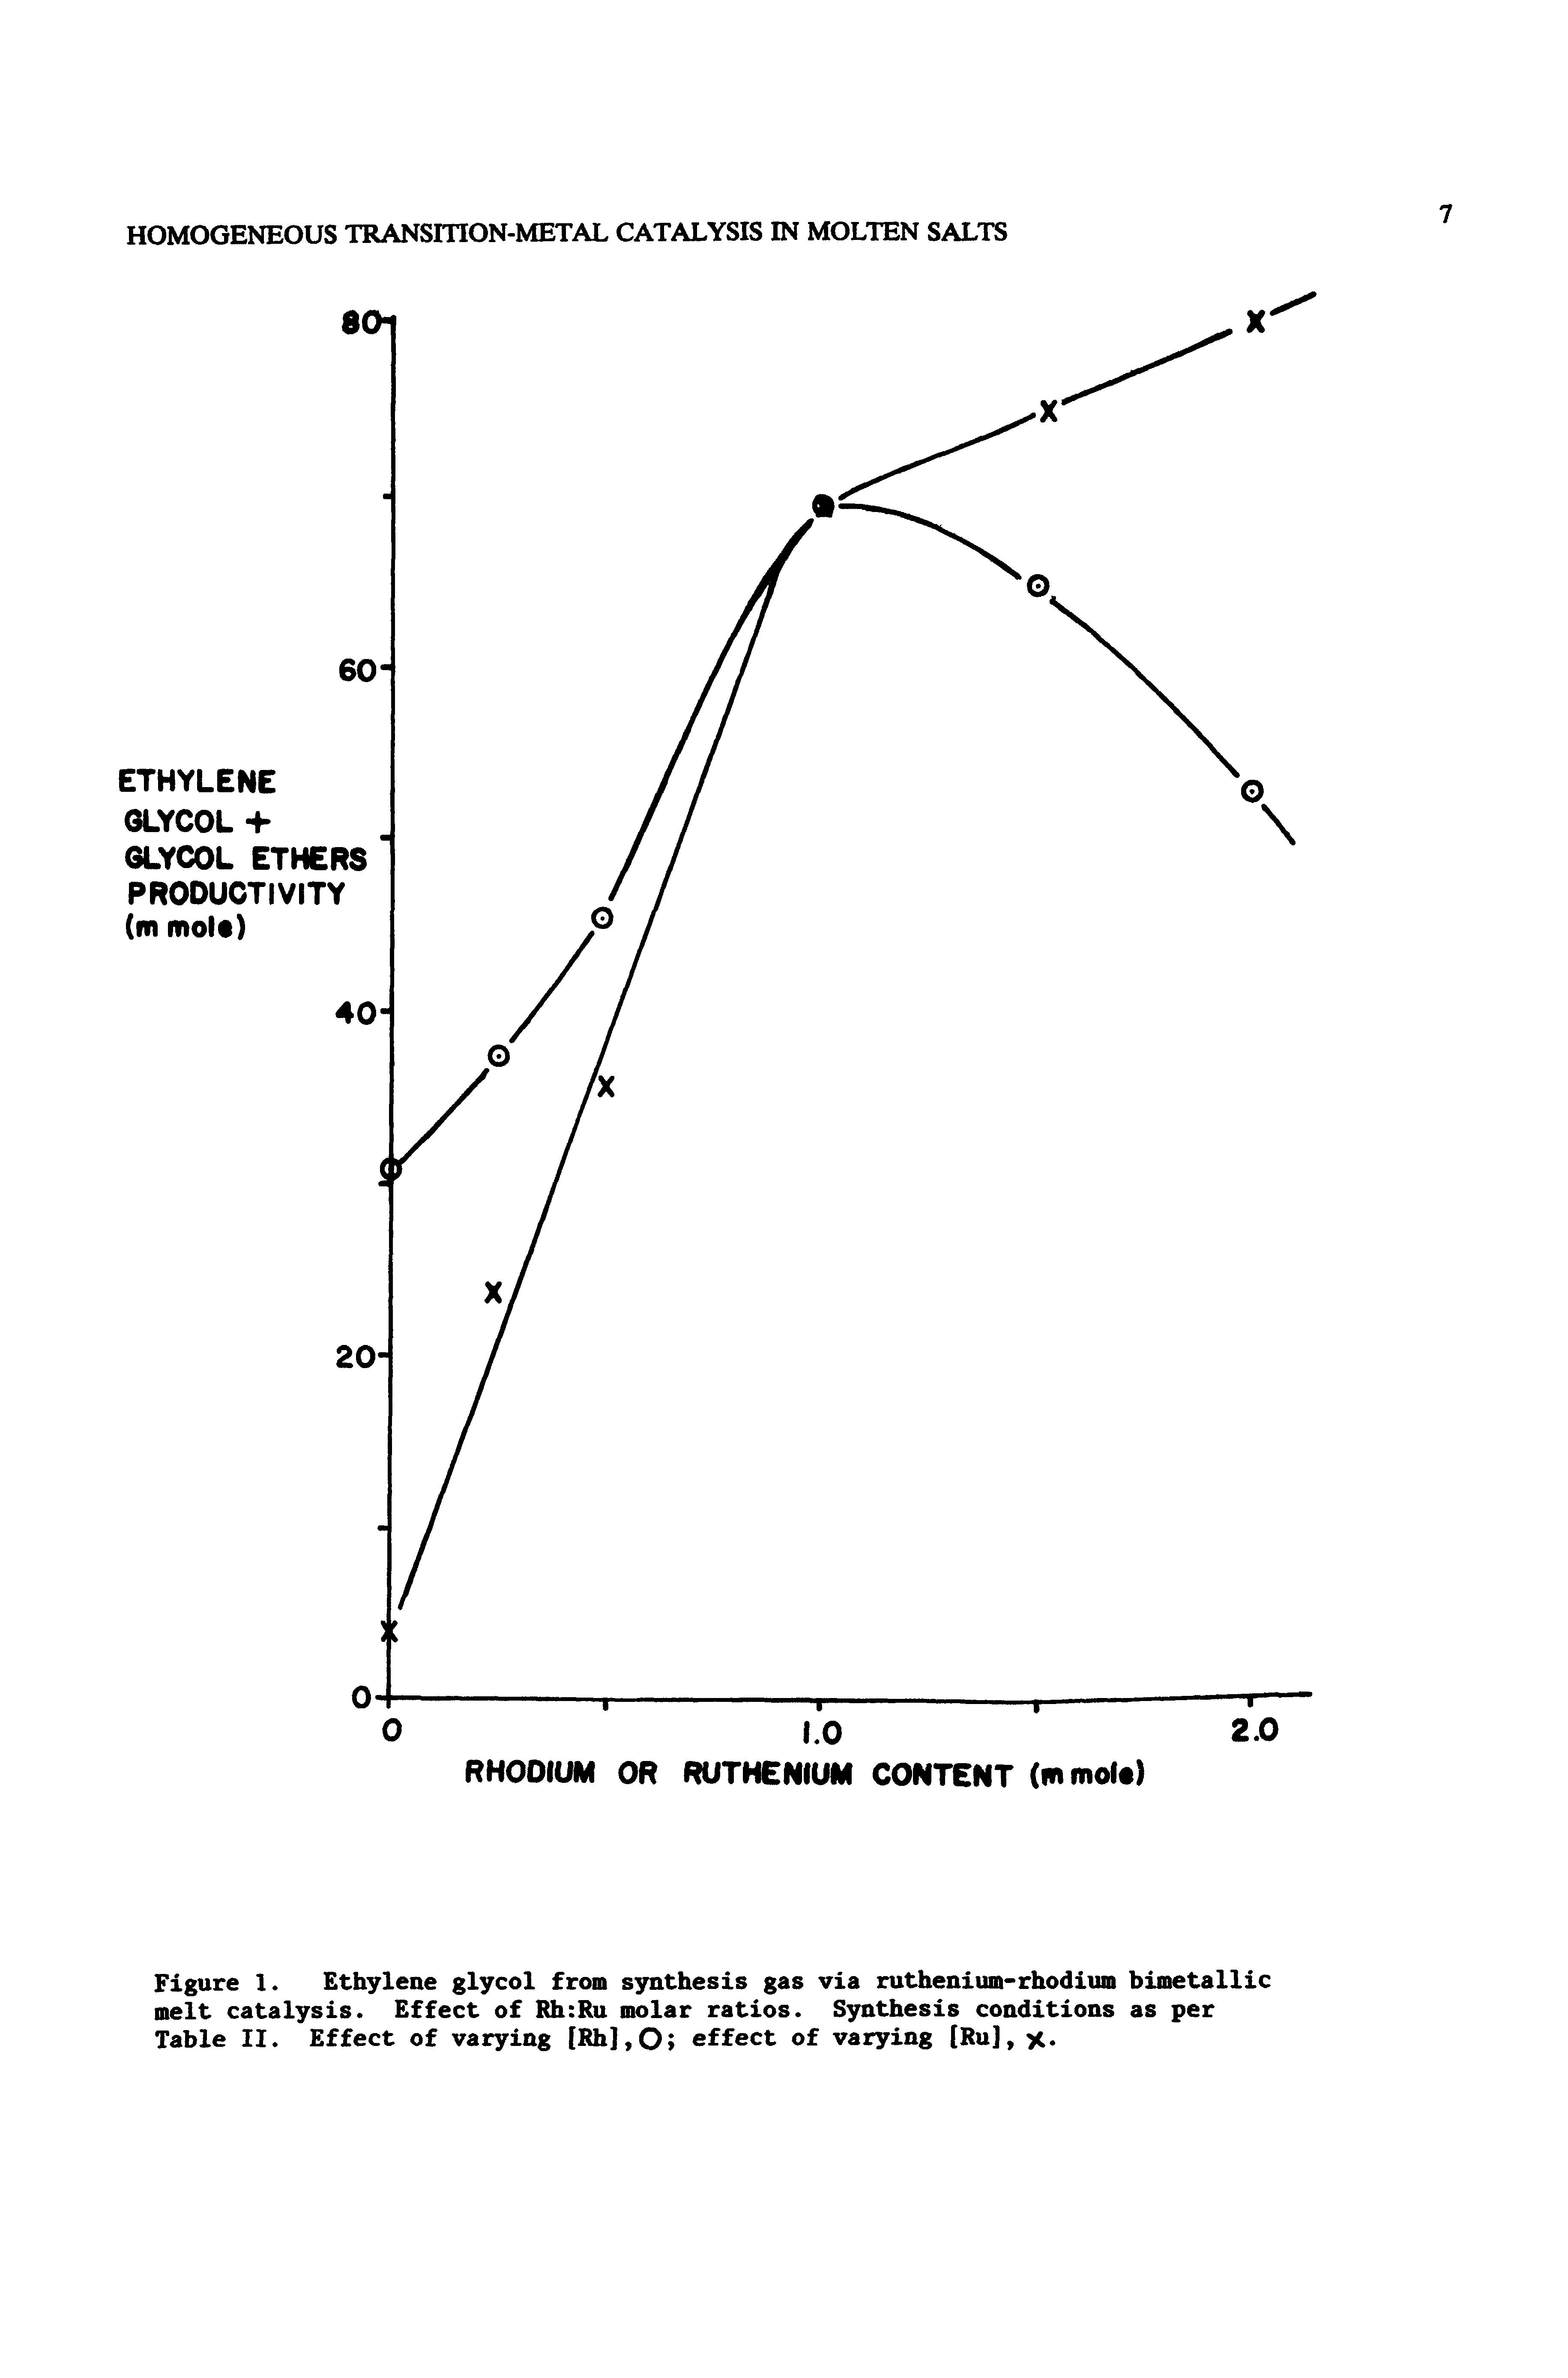 Figure 1. Ethylene glycol from synthesis gas via ruthenium rhodium bimetallic melt catalysis. Effect of Rh Ru molar ratios. Synthesis conditions as per Table II. Effect of varying [Rh],0 effect of varying [Ru],...